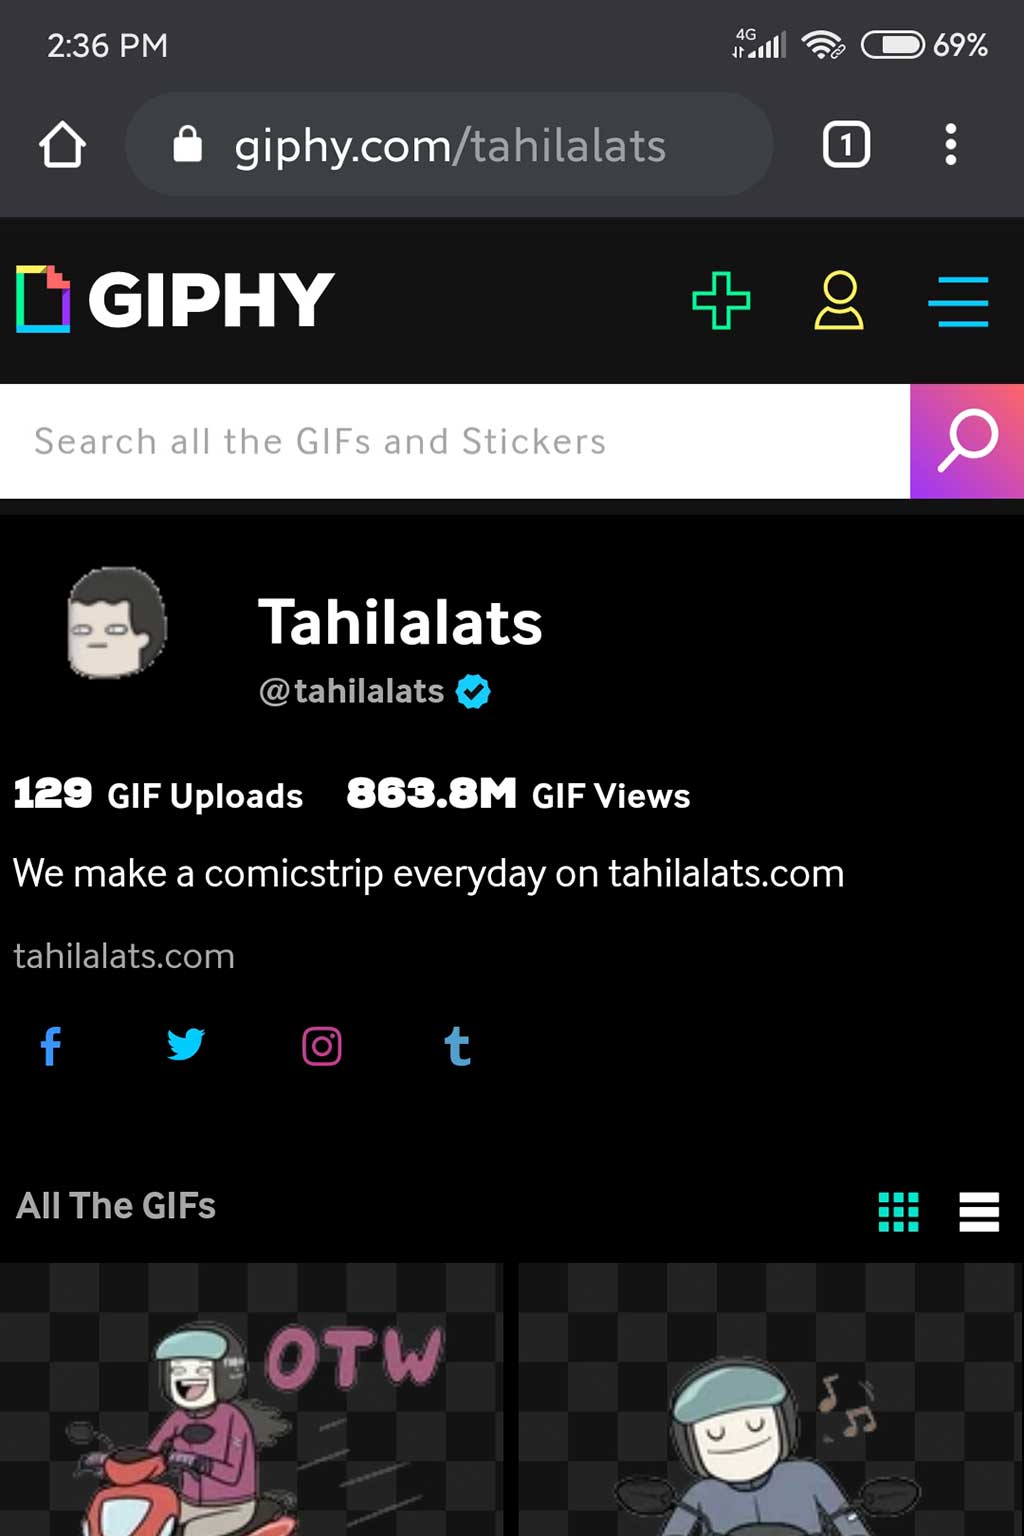 Giphy.com